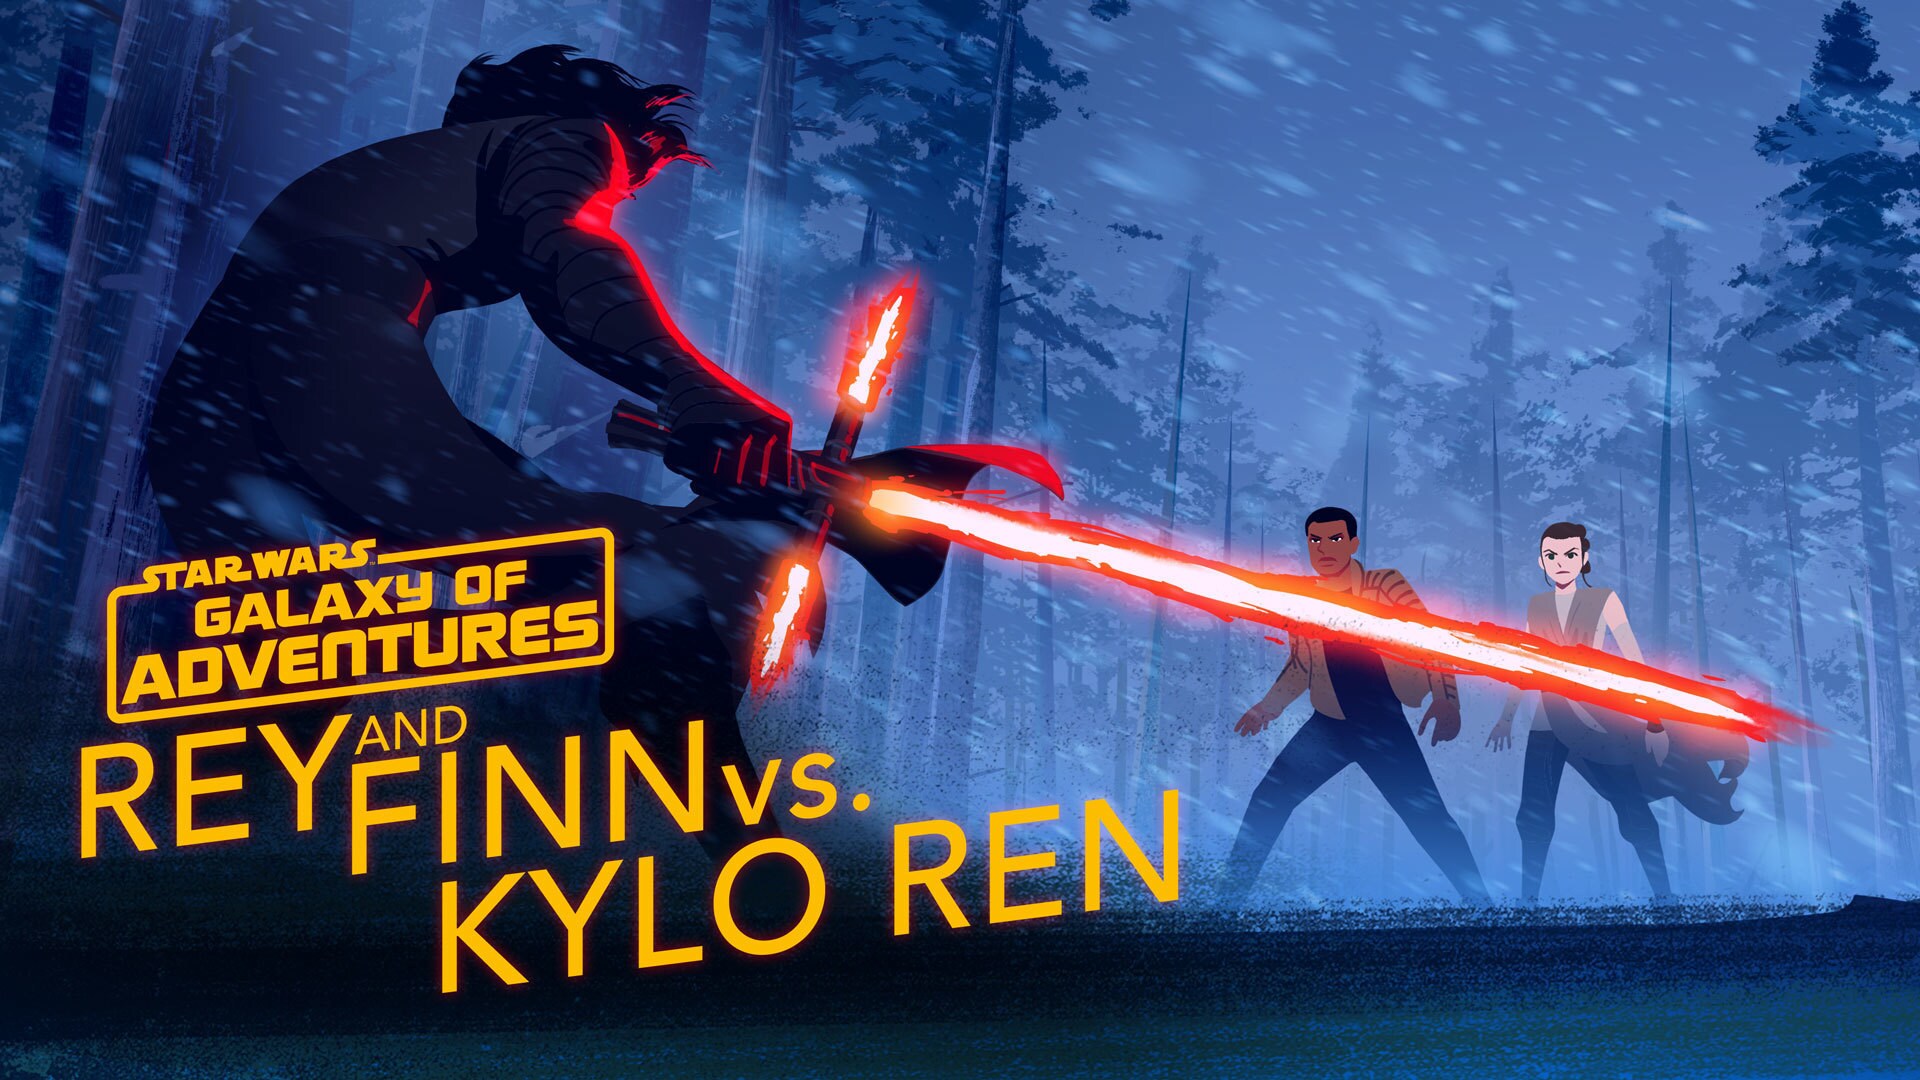 Rey and Finn vs. Kylo Ren | Star Wars Galaxy of Adventures